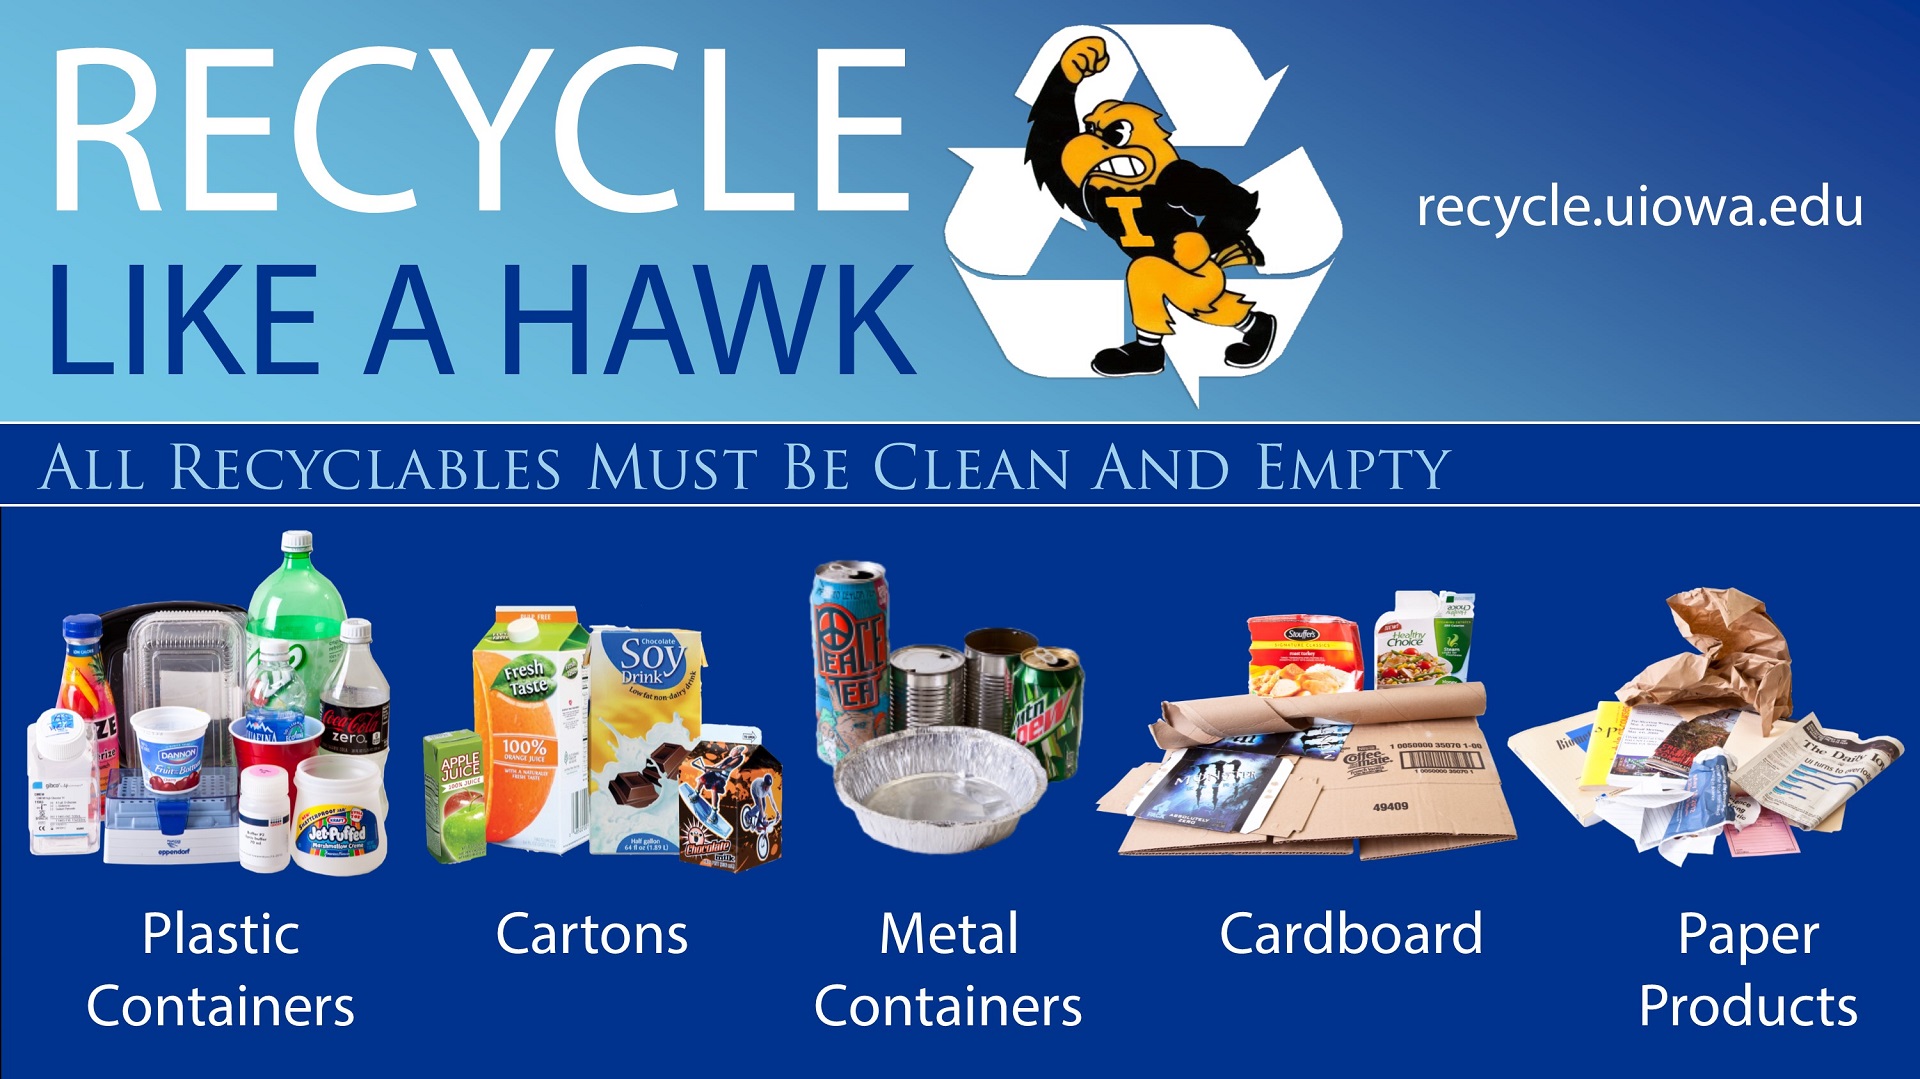 Recycle Like a Hawk